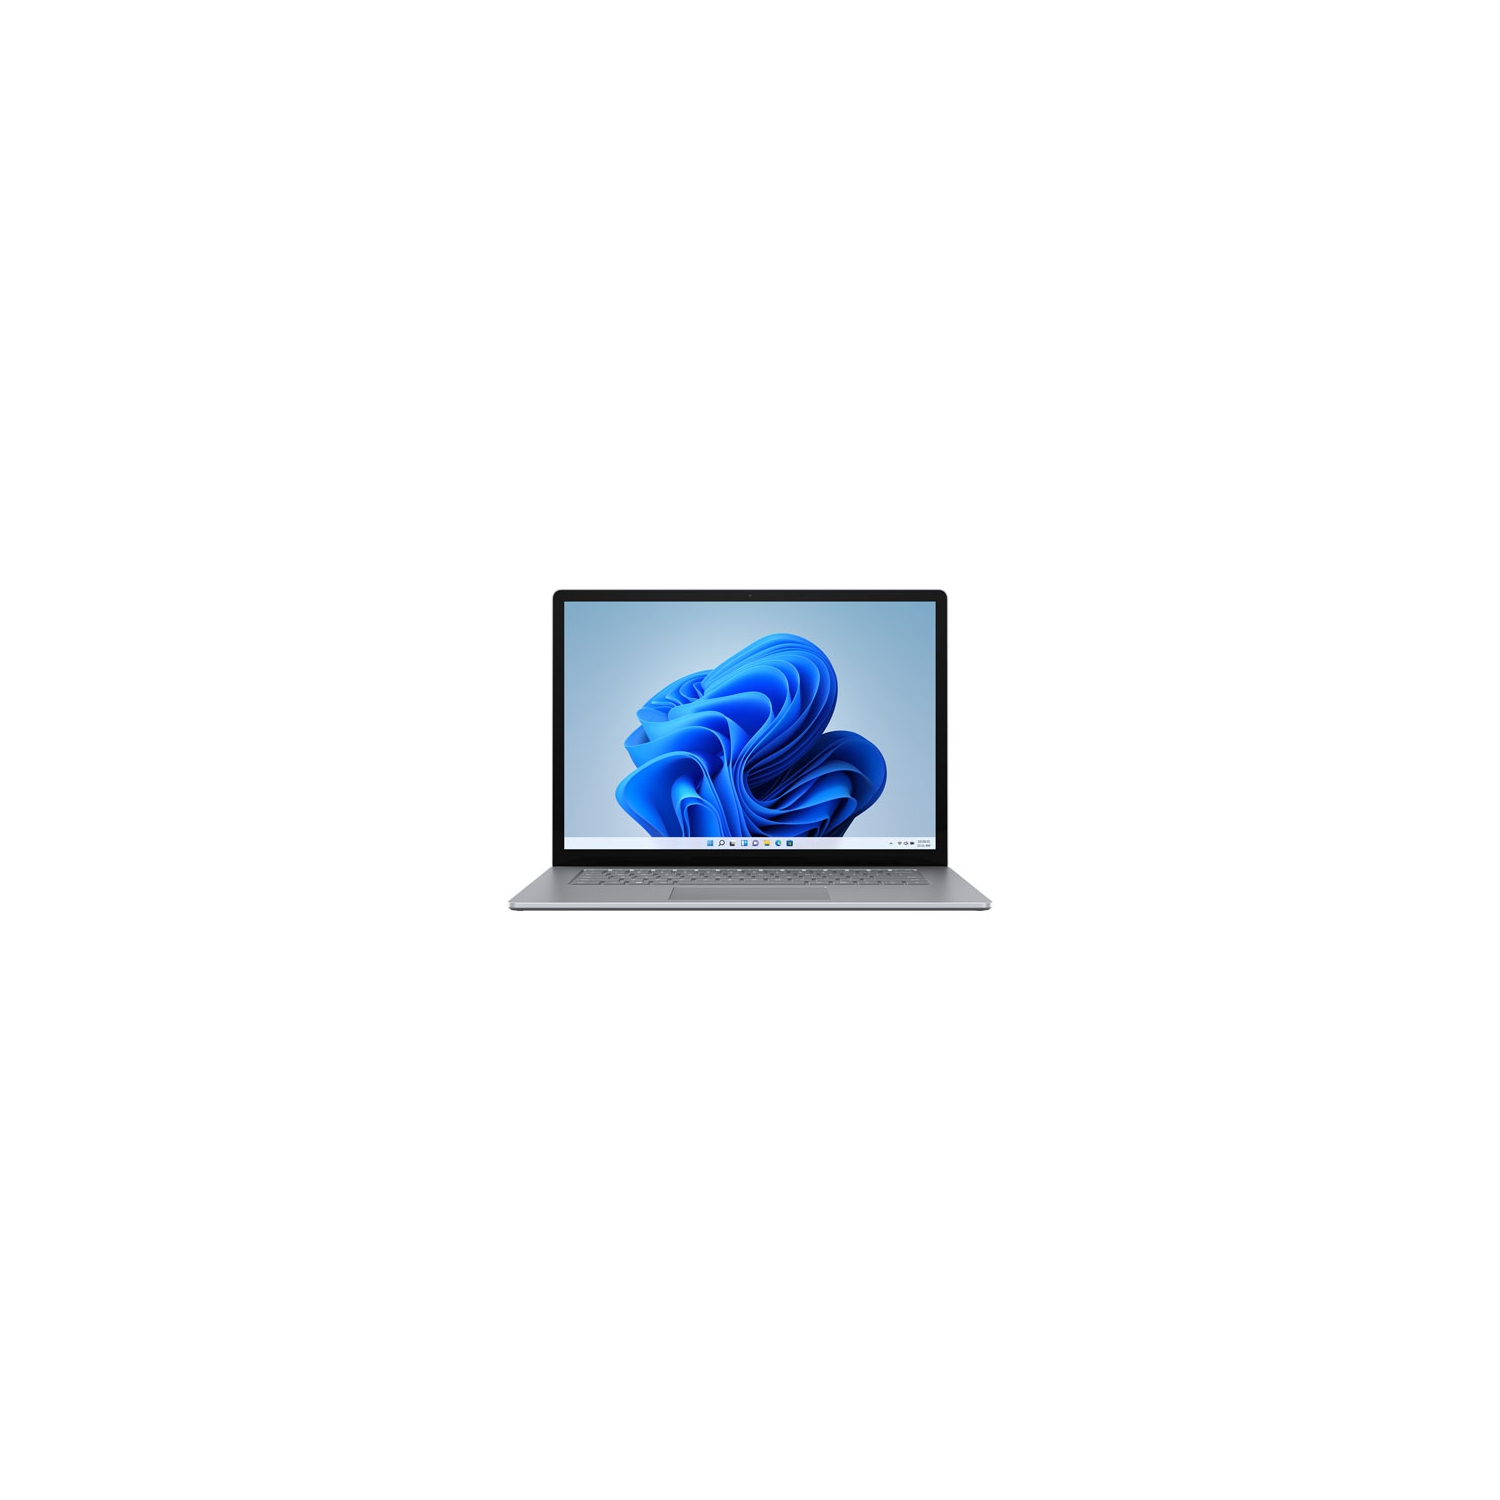 Microsoft Surface Laptop 4 Touchscreen 15" - Platinum (AMD Ryzen 7 4980U/256GB SSD/8GB RAM) - French - Open Box